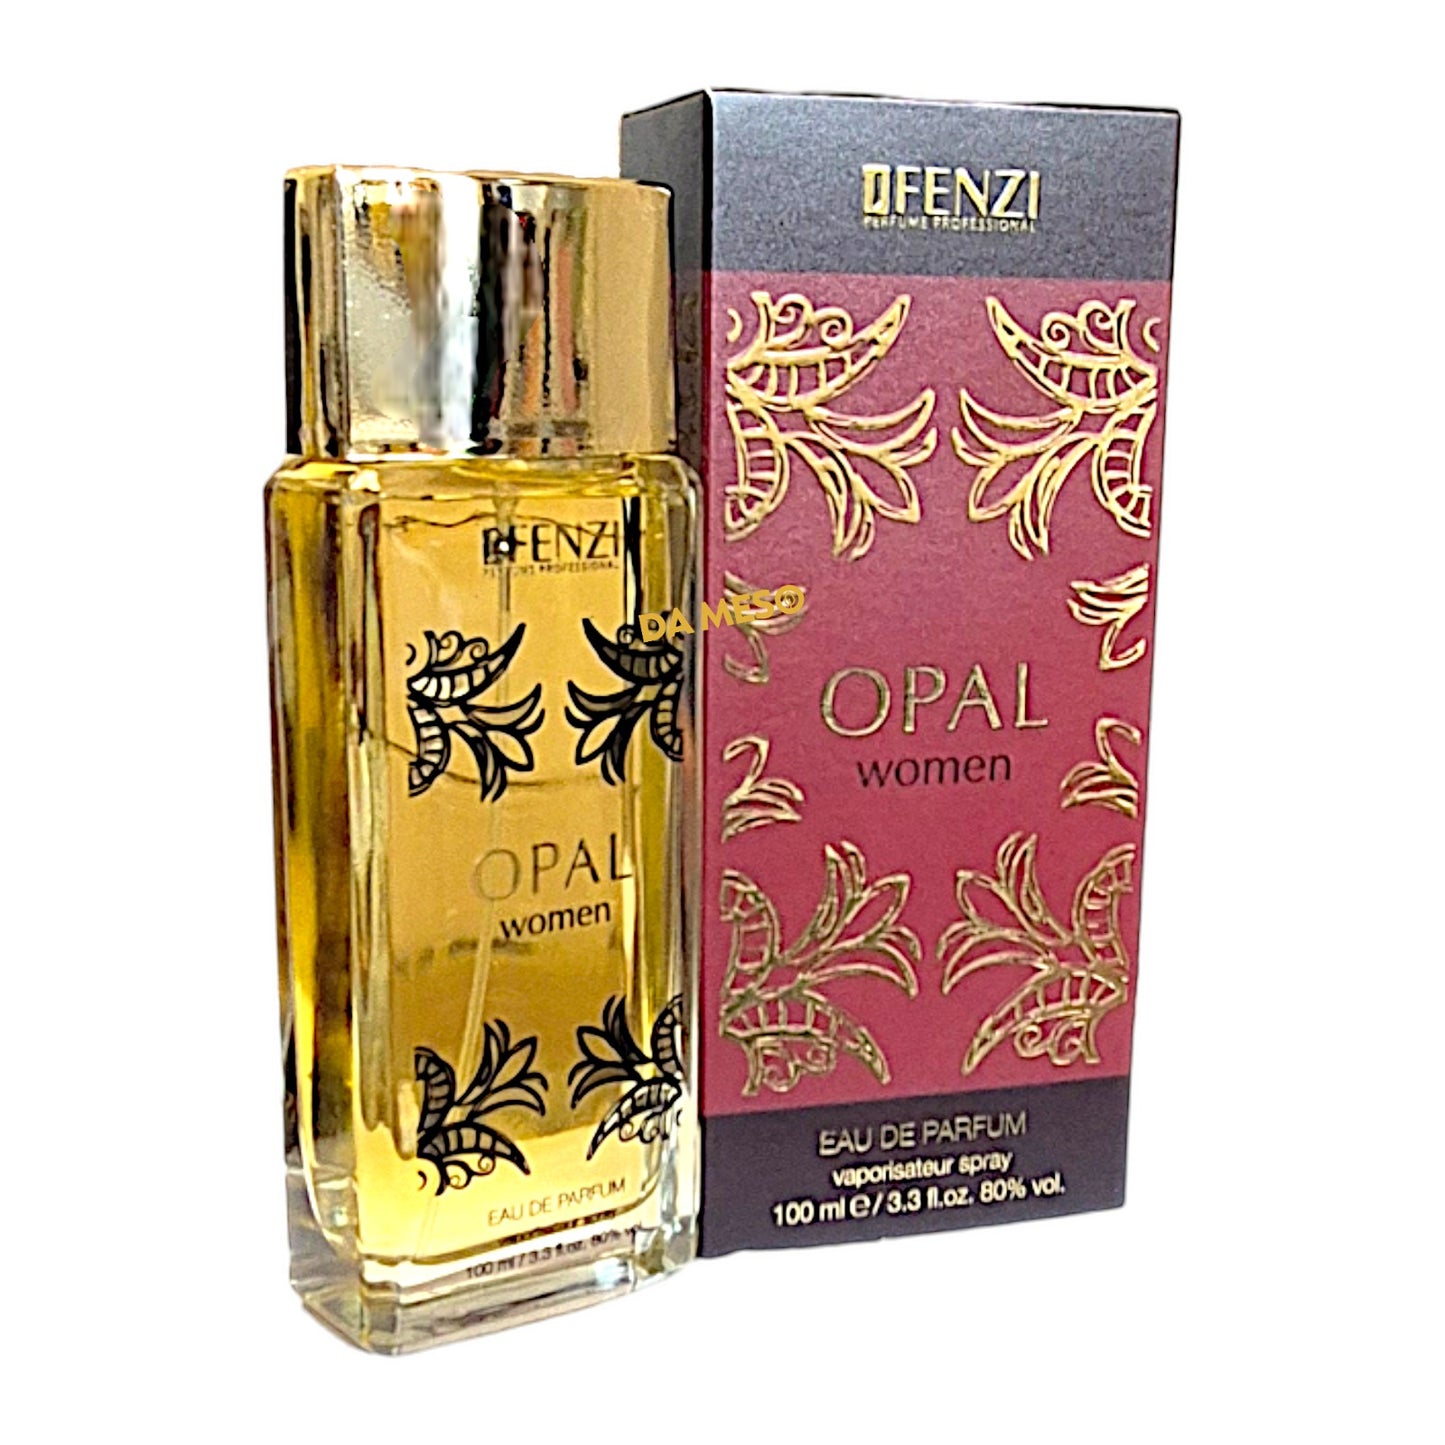 JFenzi OPAL Women Eau de Parfum 100 ml